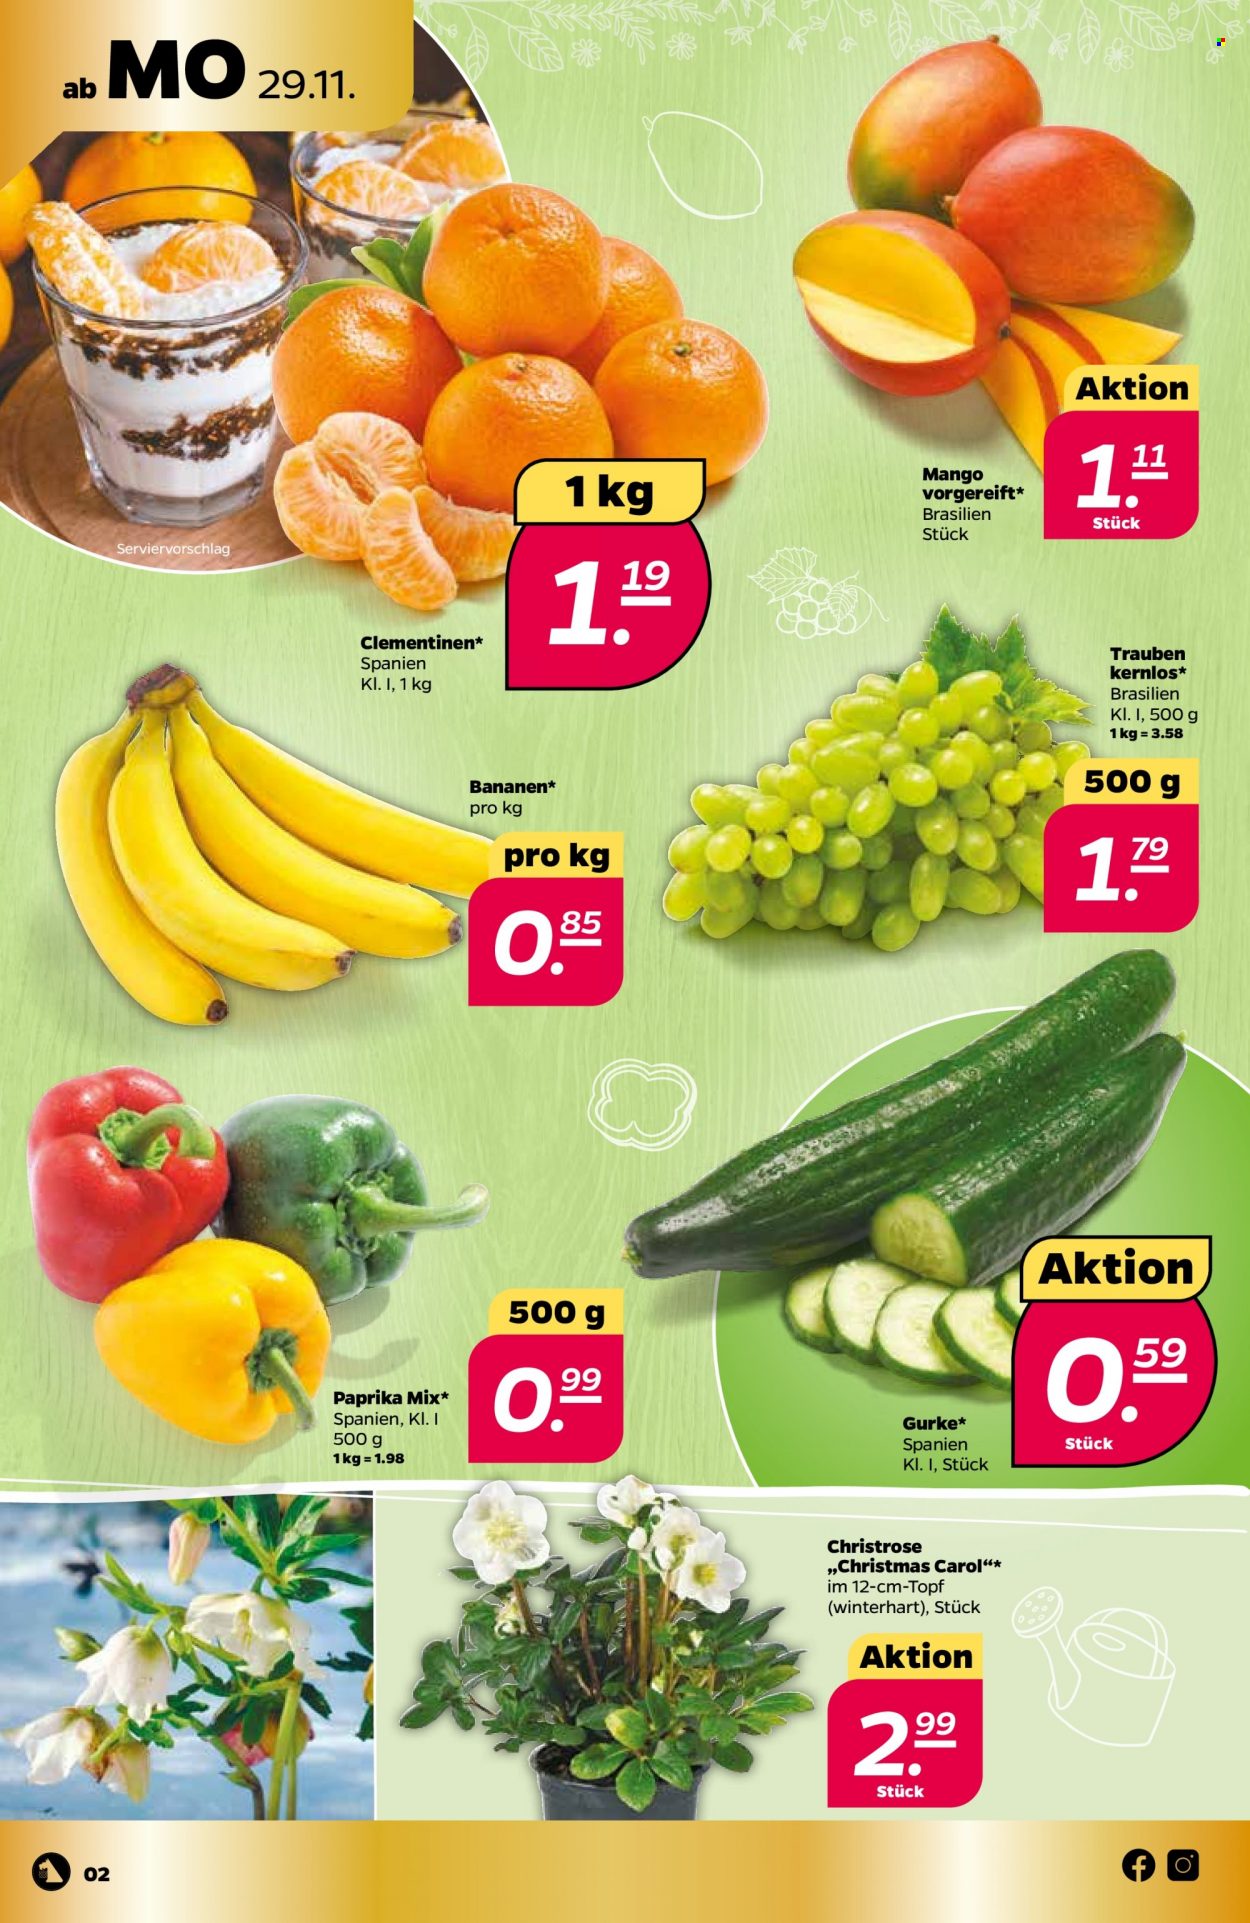 thumbnail - Prospekte Netto - 29.11.2021 - 4.12.2021 - Produkte in Aktion - Paprika, Gurken, Trauben, Bananen, Mango, Clementinen, Christrose. Seite 2.